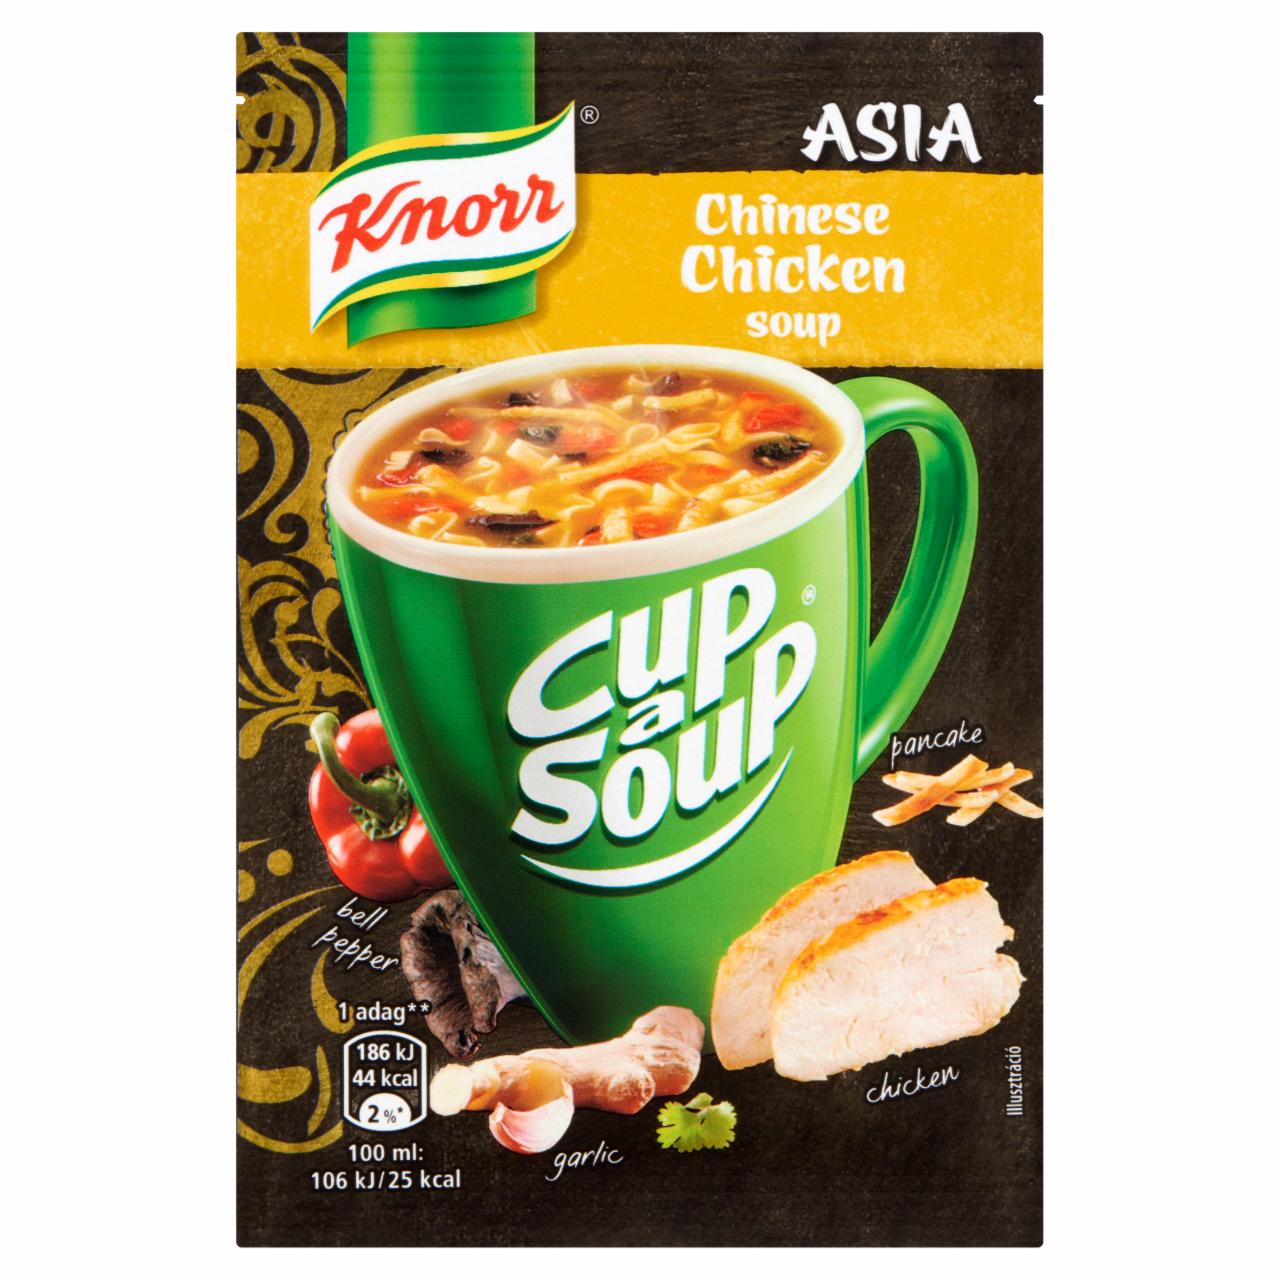 Képek - Knorr Cup a Soup Asia kínai csirkeleves 12 g